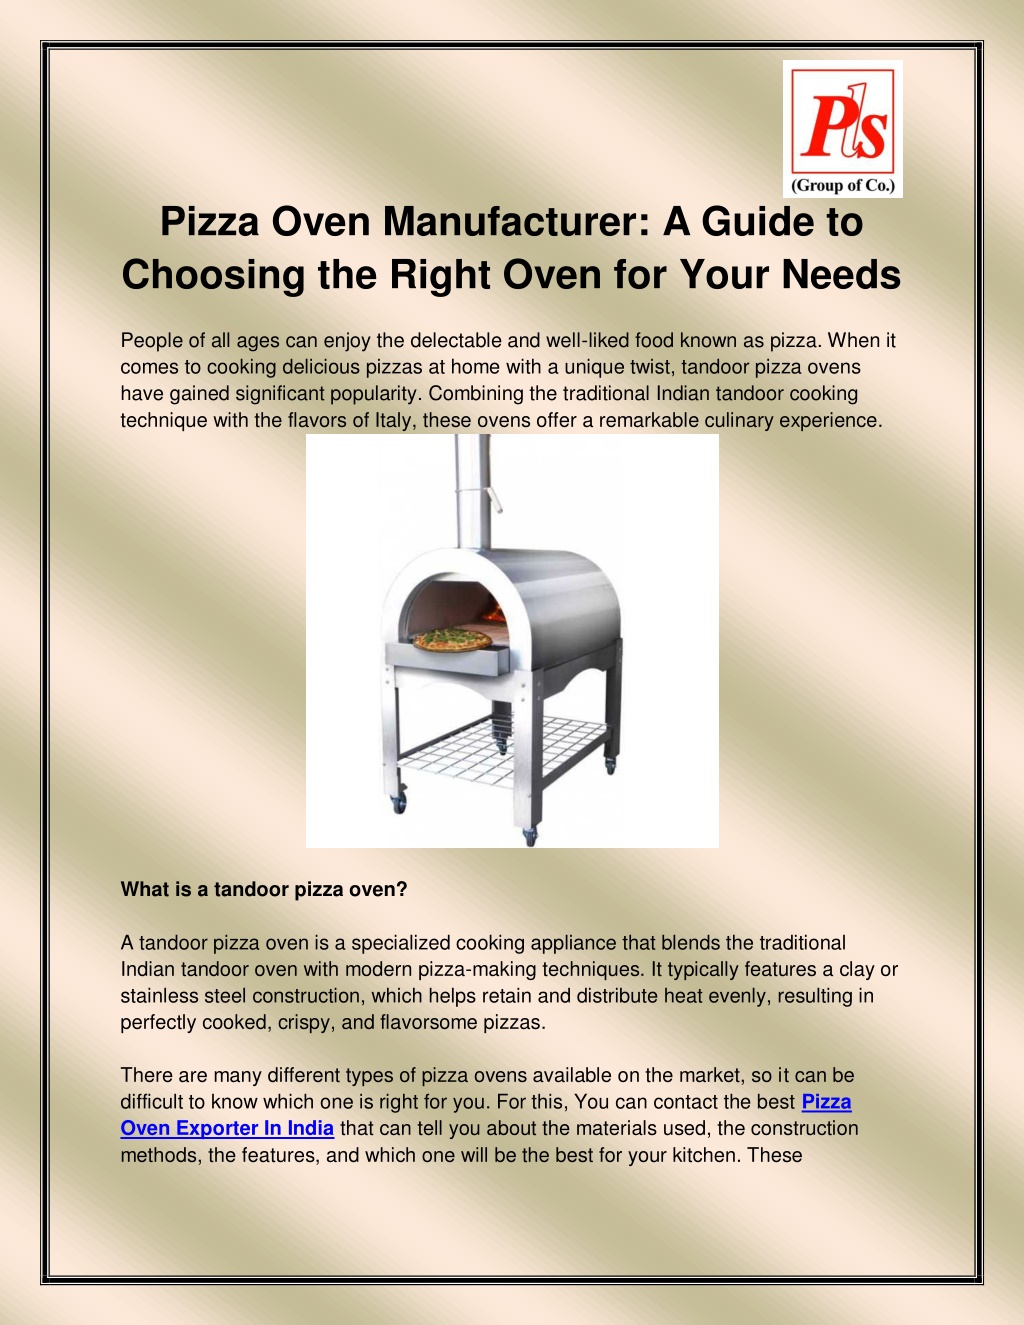 https://image7.slideserve.com/12254142/pizza-oven-manufacturer-a-guide-to-choosing-l.jpg